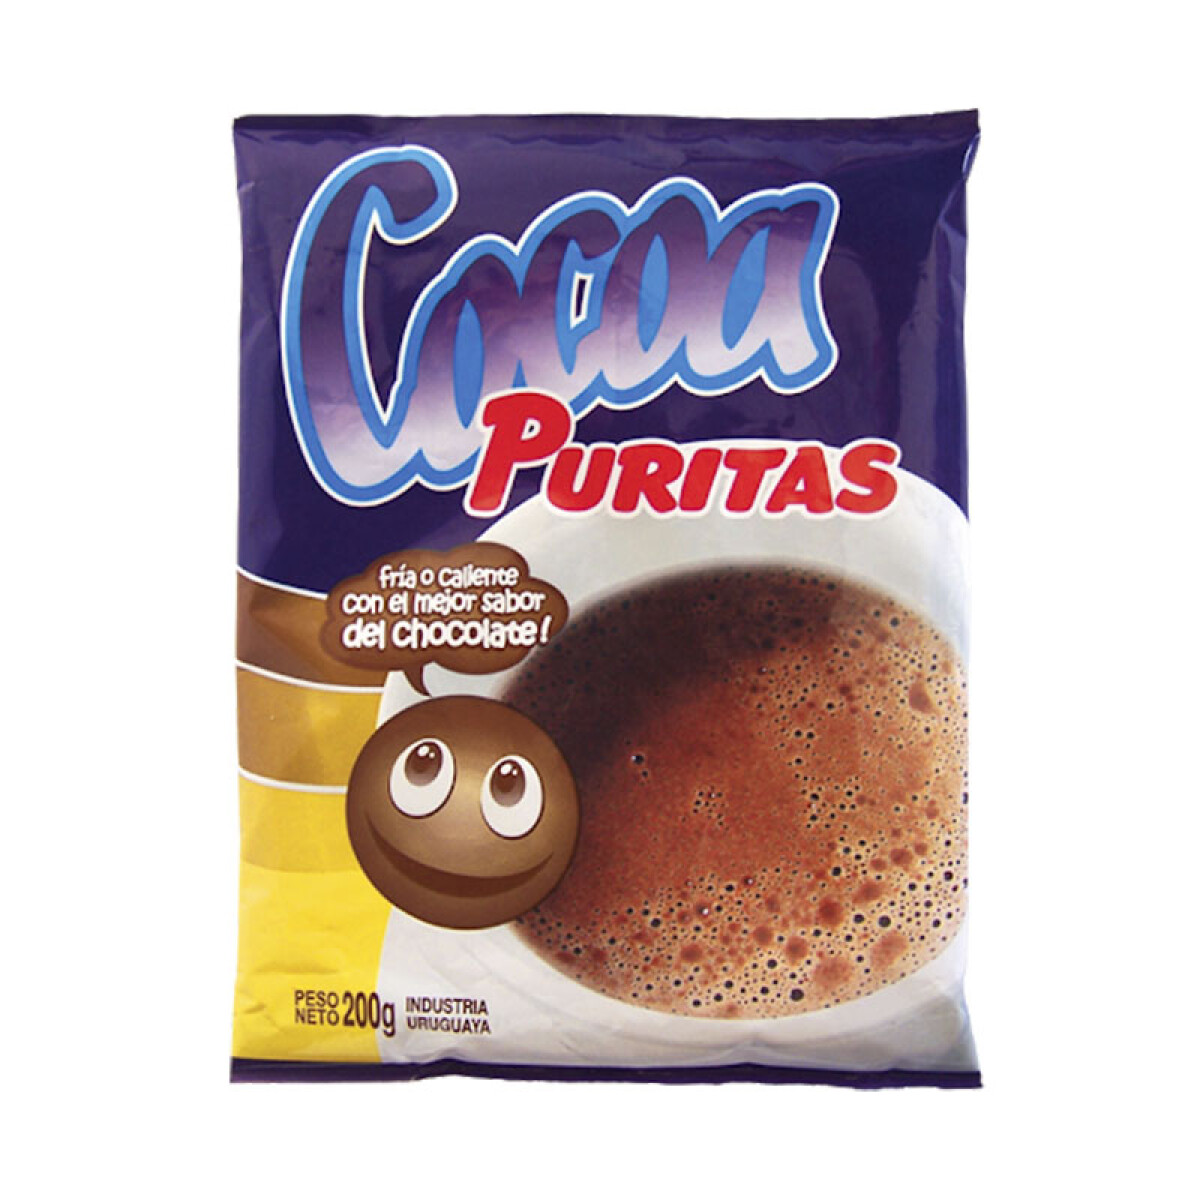 Cocoa PURITAS 200grs 